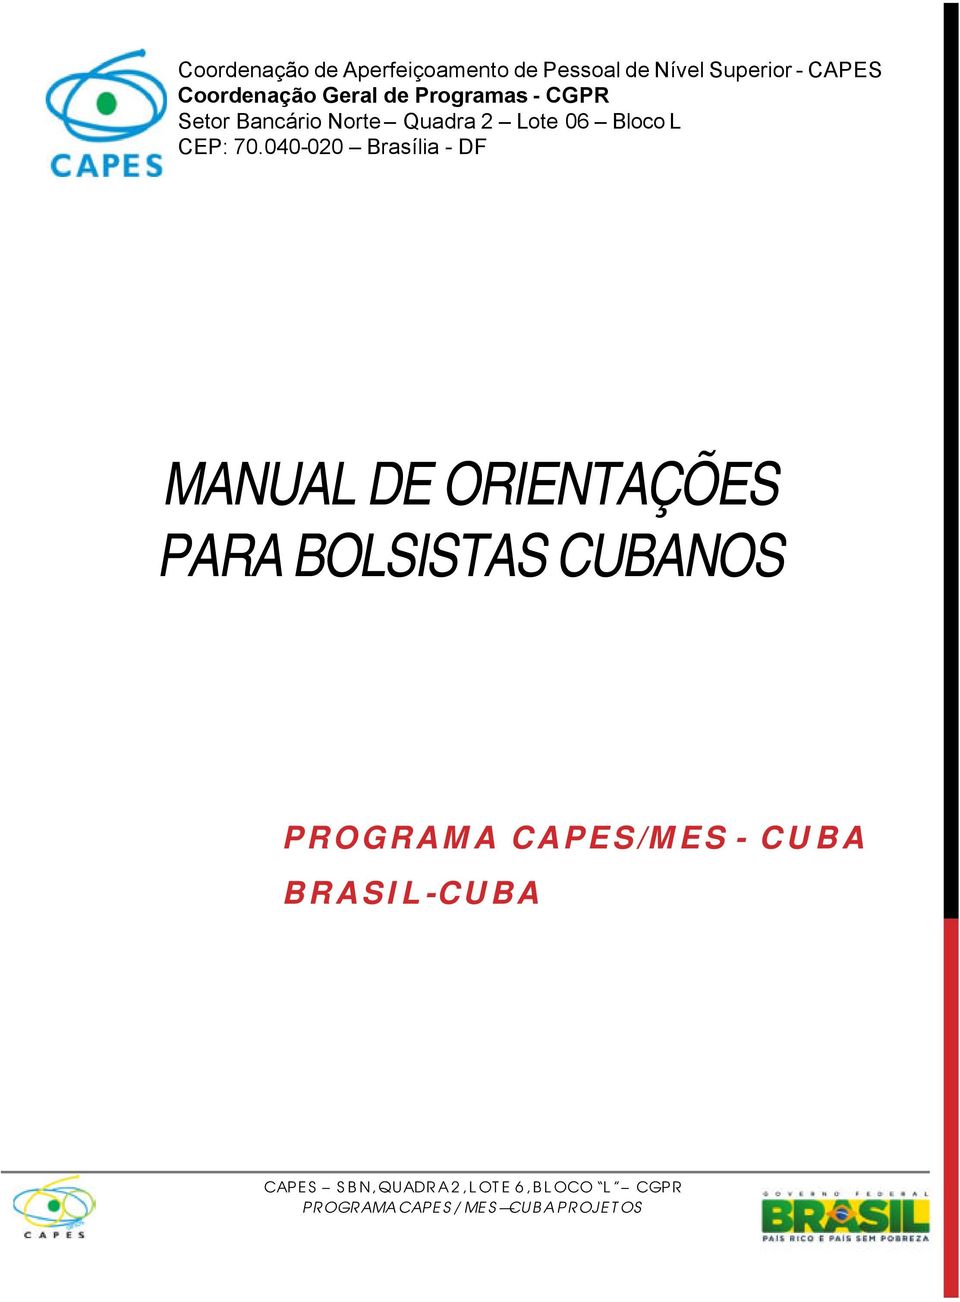 CAPES/MES - CUBA BRASIL-CUBA